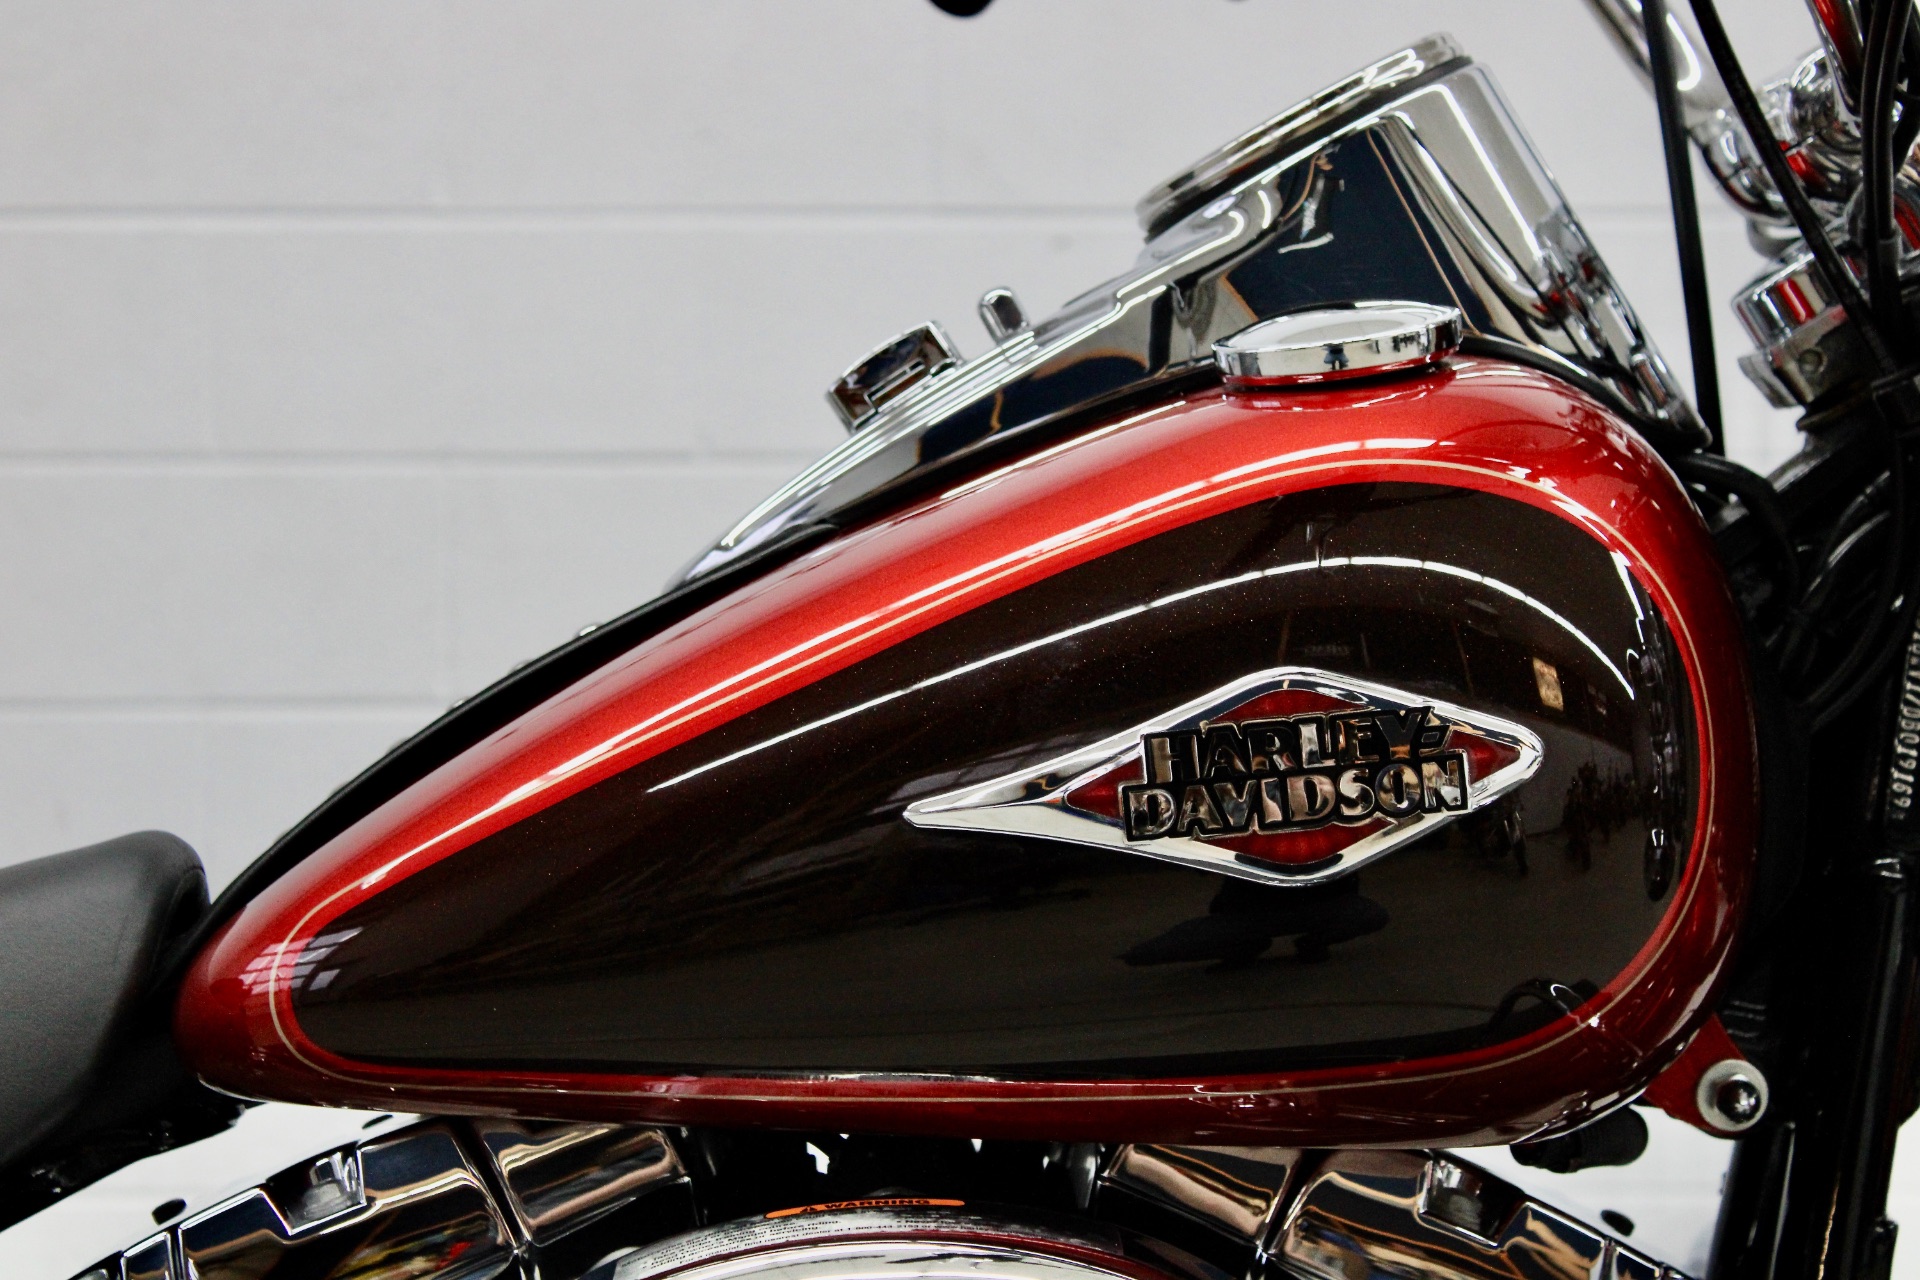 2013 Harley-Davidson Heritage Softail® Classic in Fredericksburg, Virginia - Photo 13